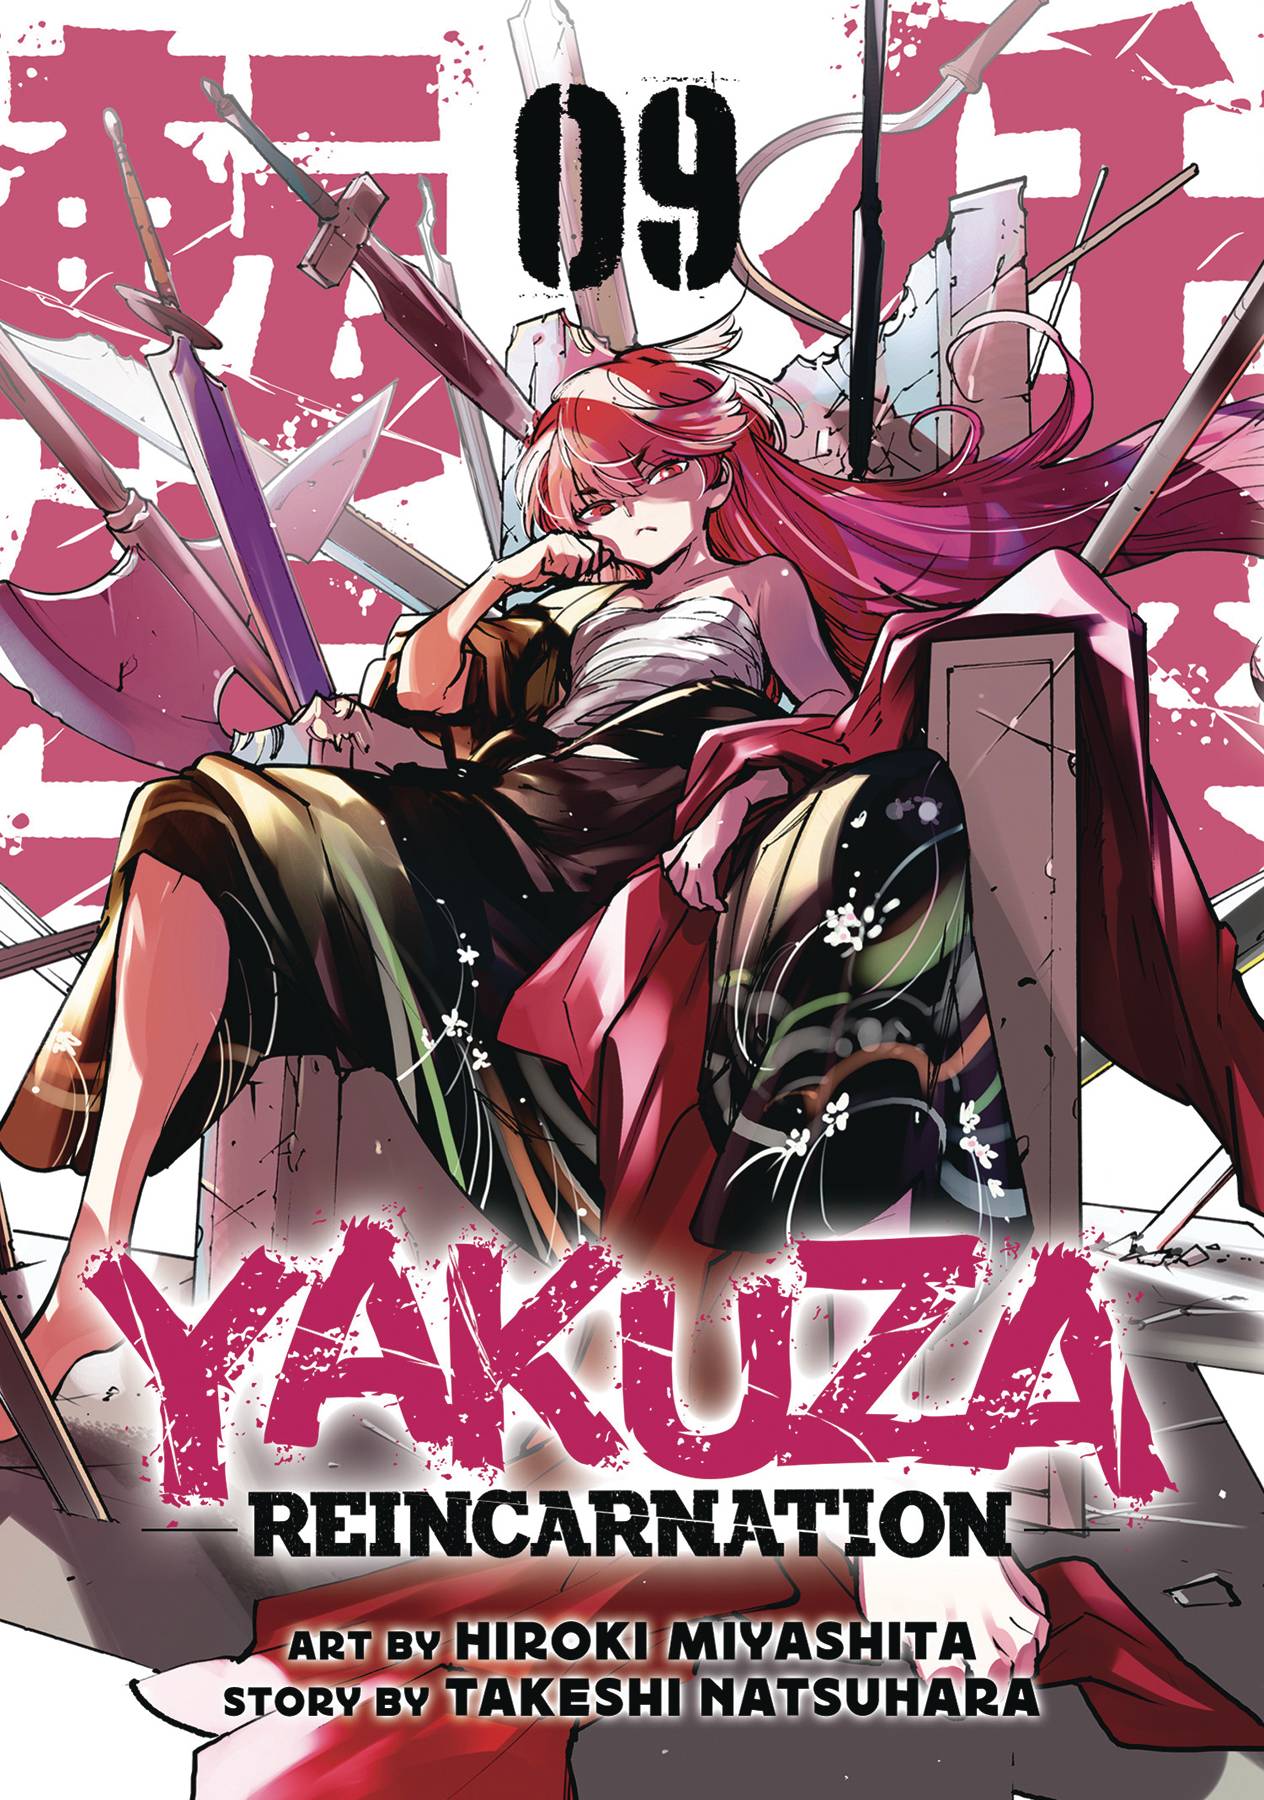 YAKUZA REINCARNATION GN 09